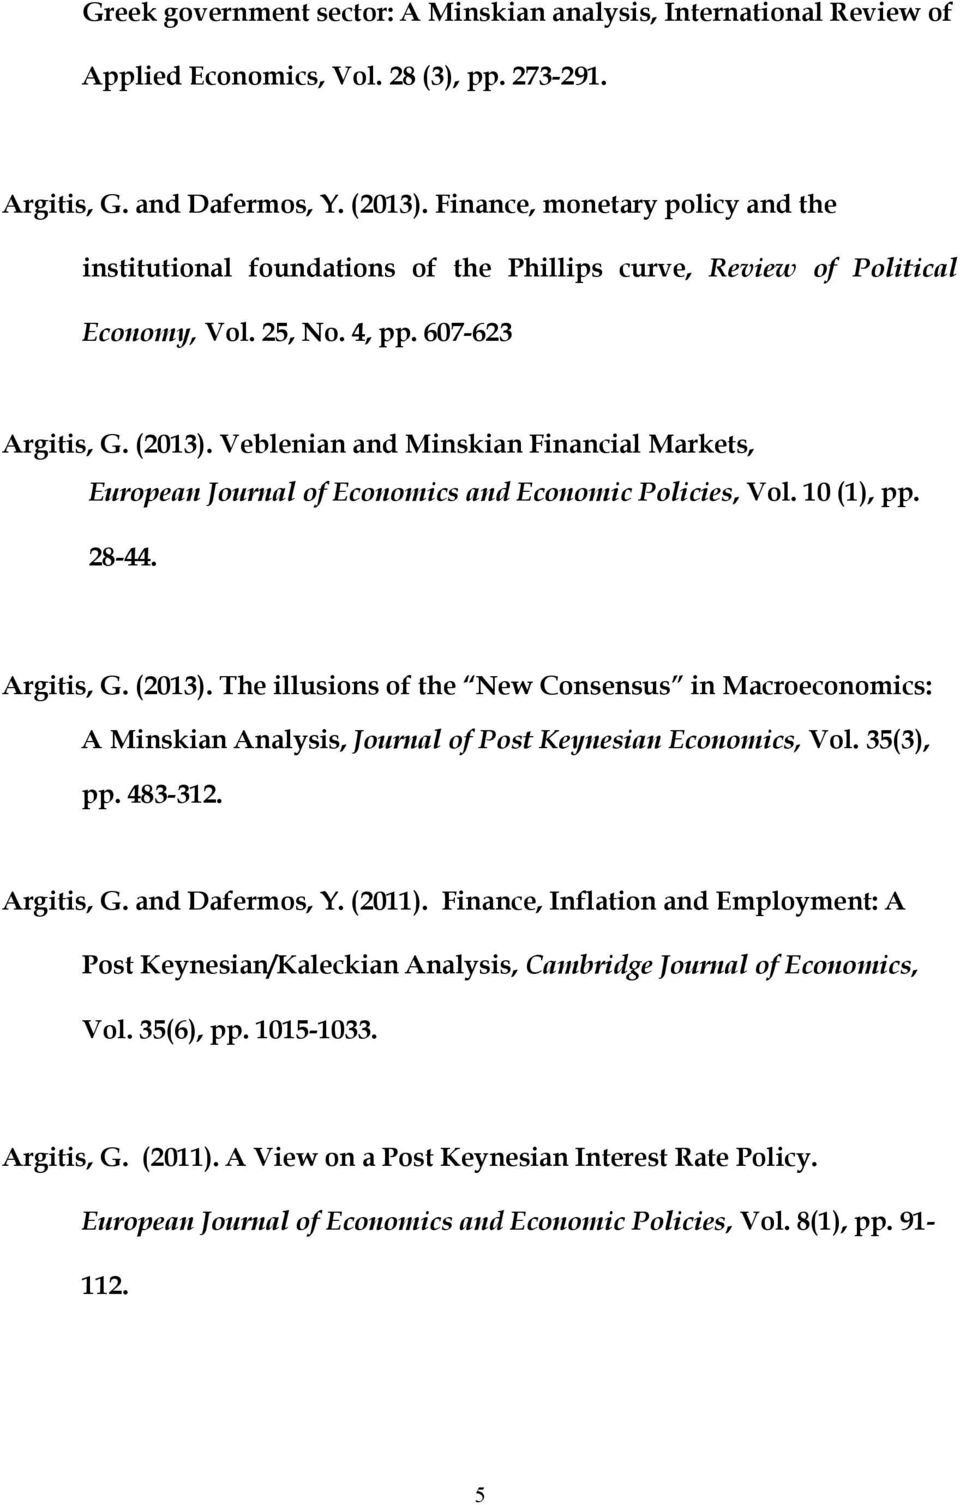 Veblenian and Minskian Financial Markets, European Journal of Economics and Economic Policies, Vol. 10 (1), pp. 28-44. Argitis, G. (2013).